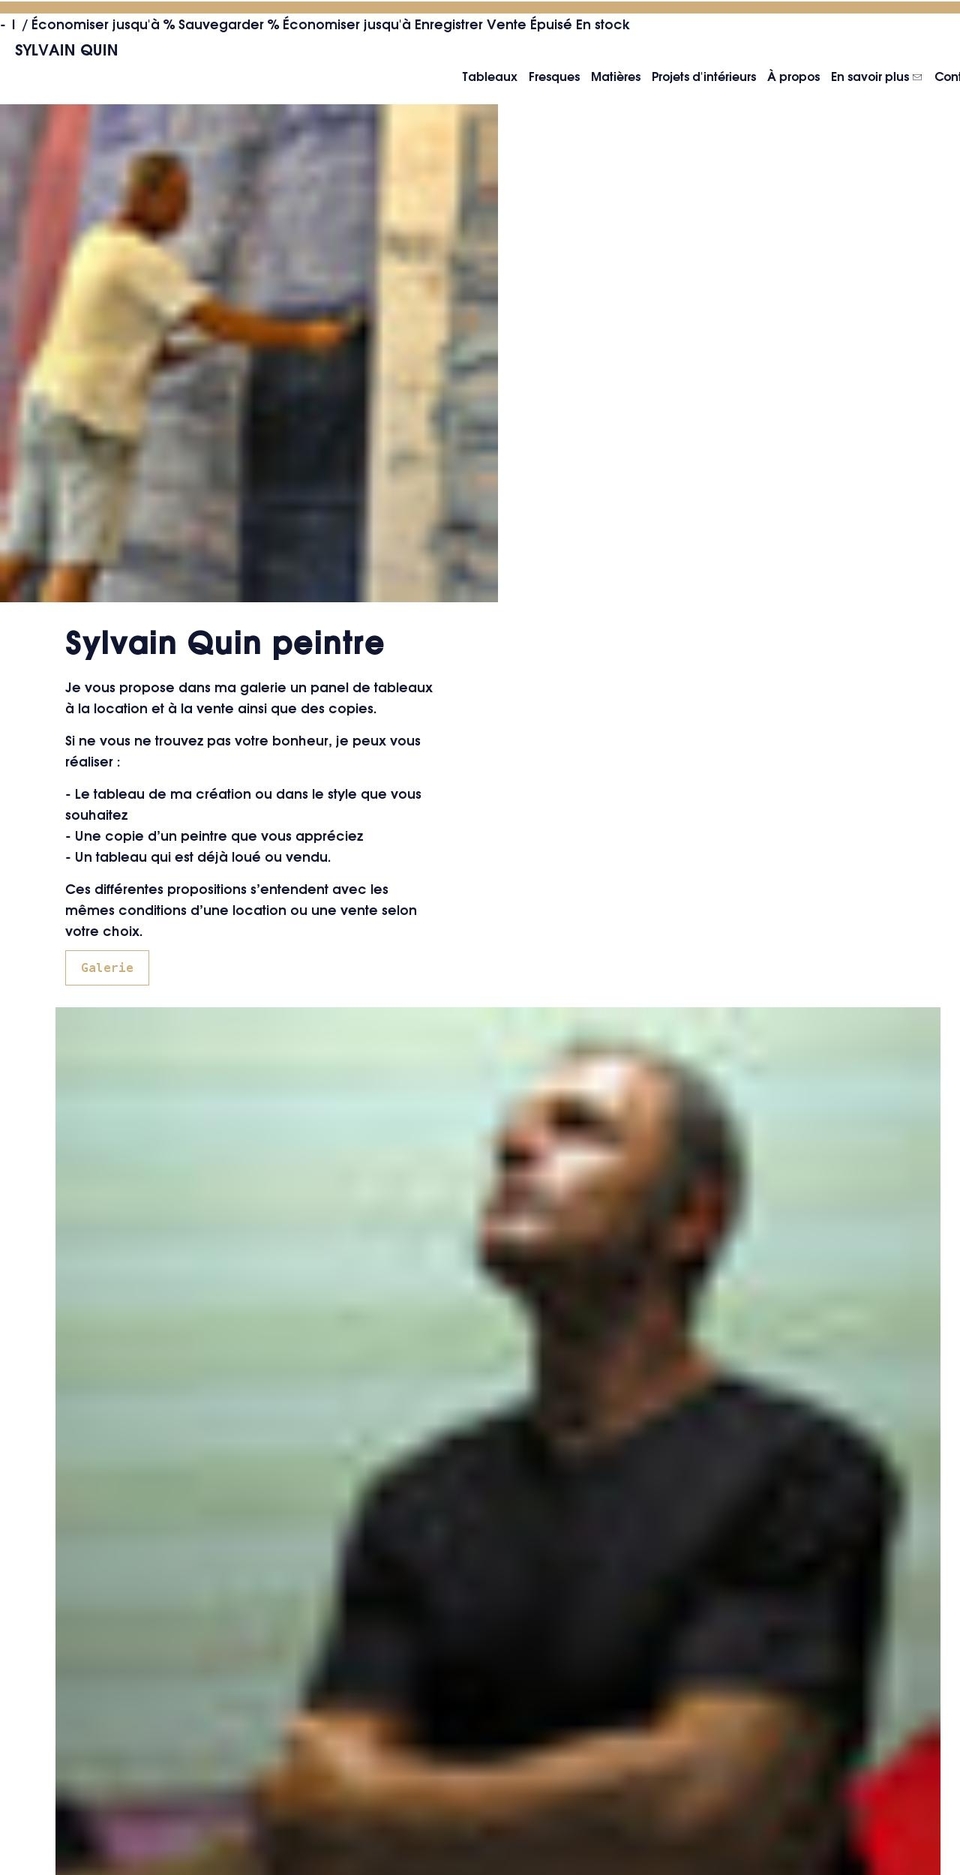 sylvainquin.fr shopify website screenshot